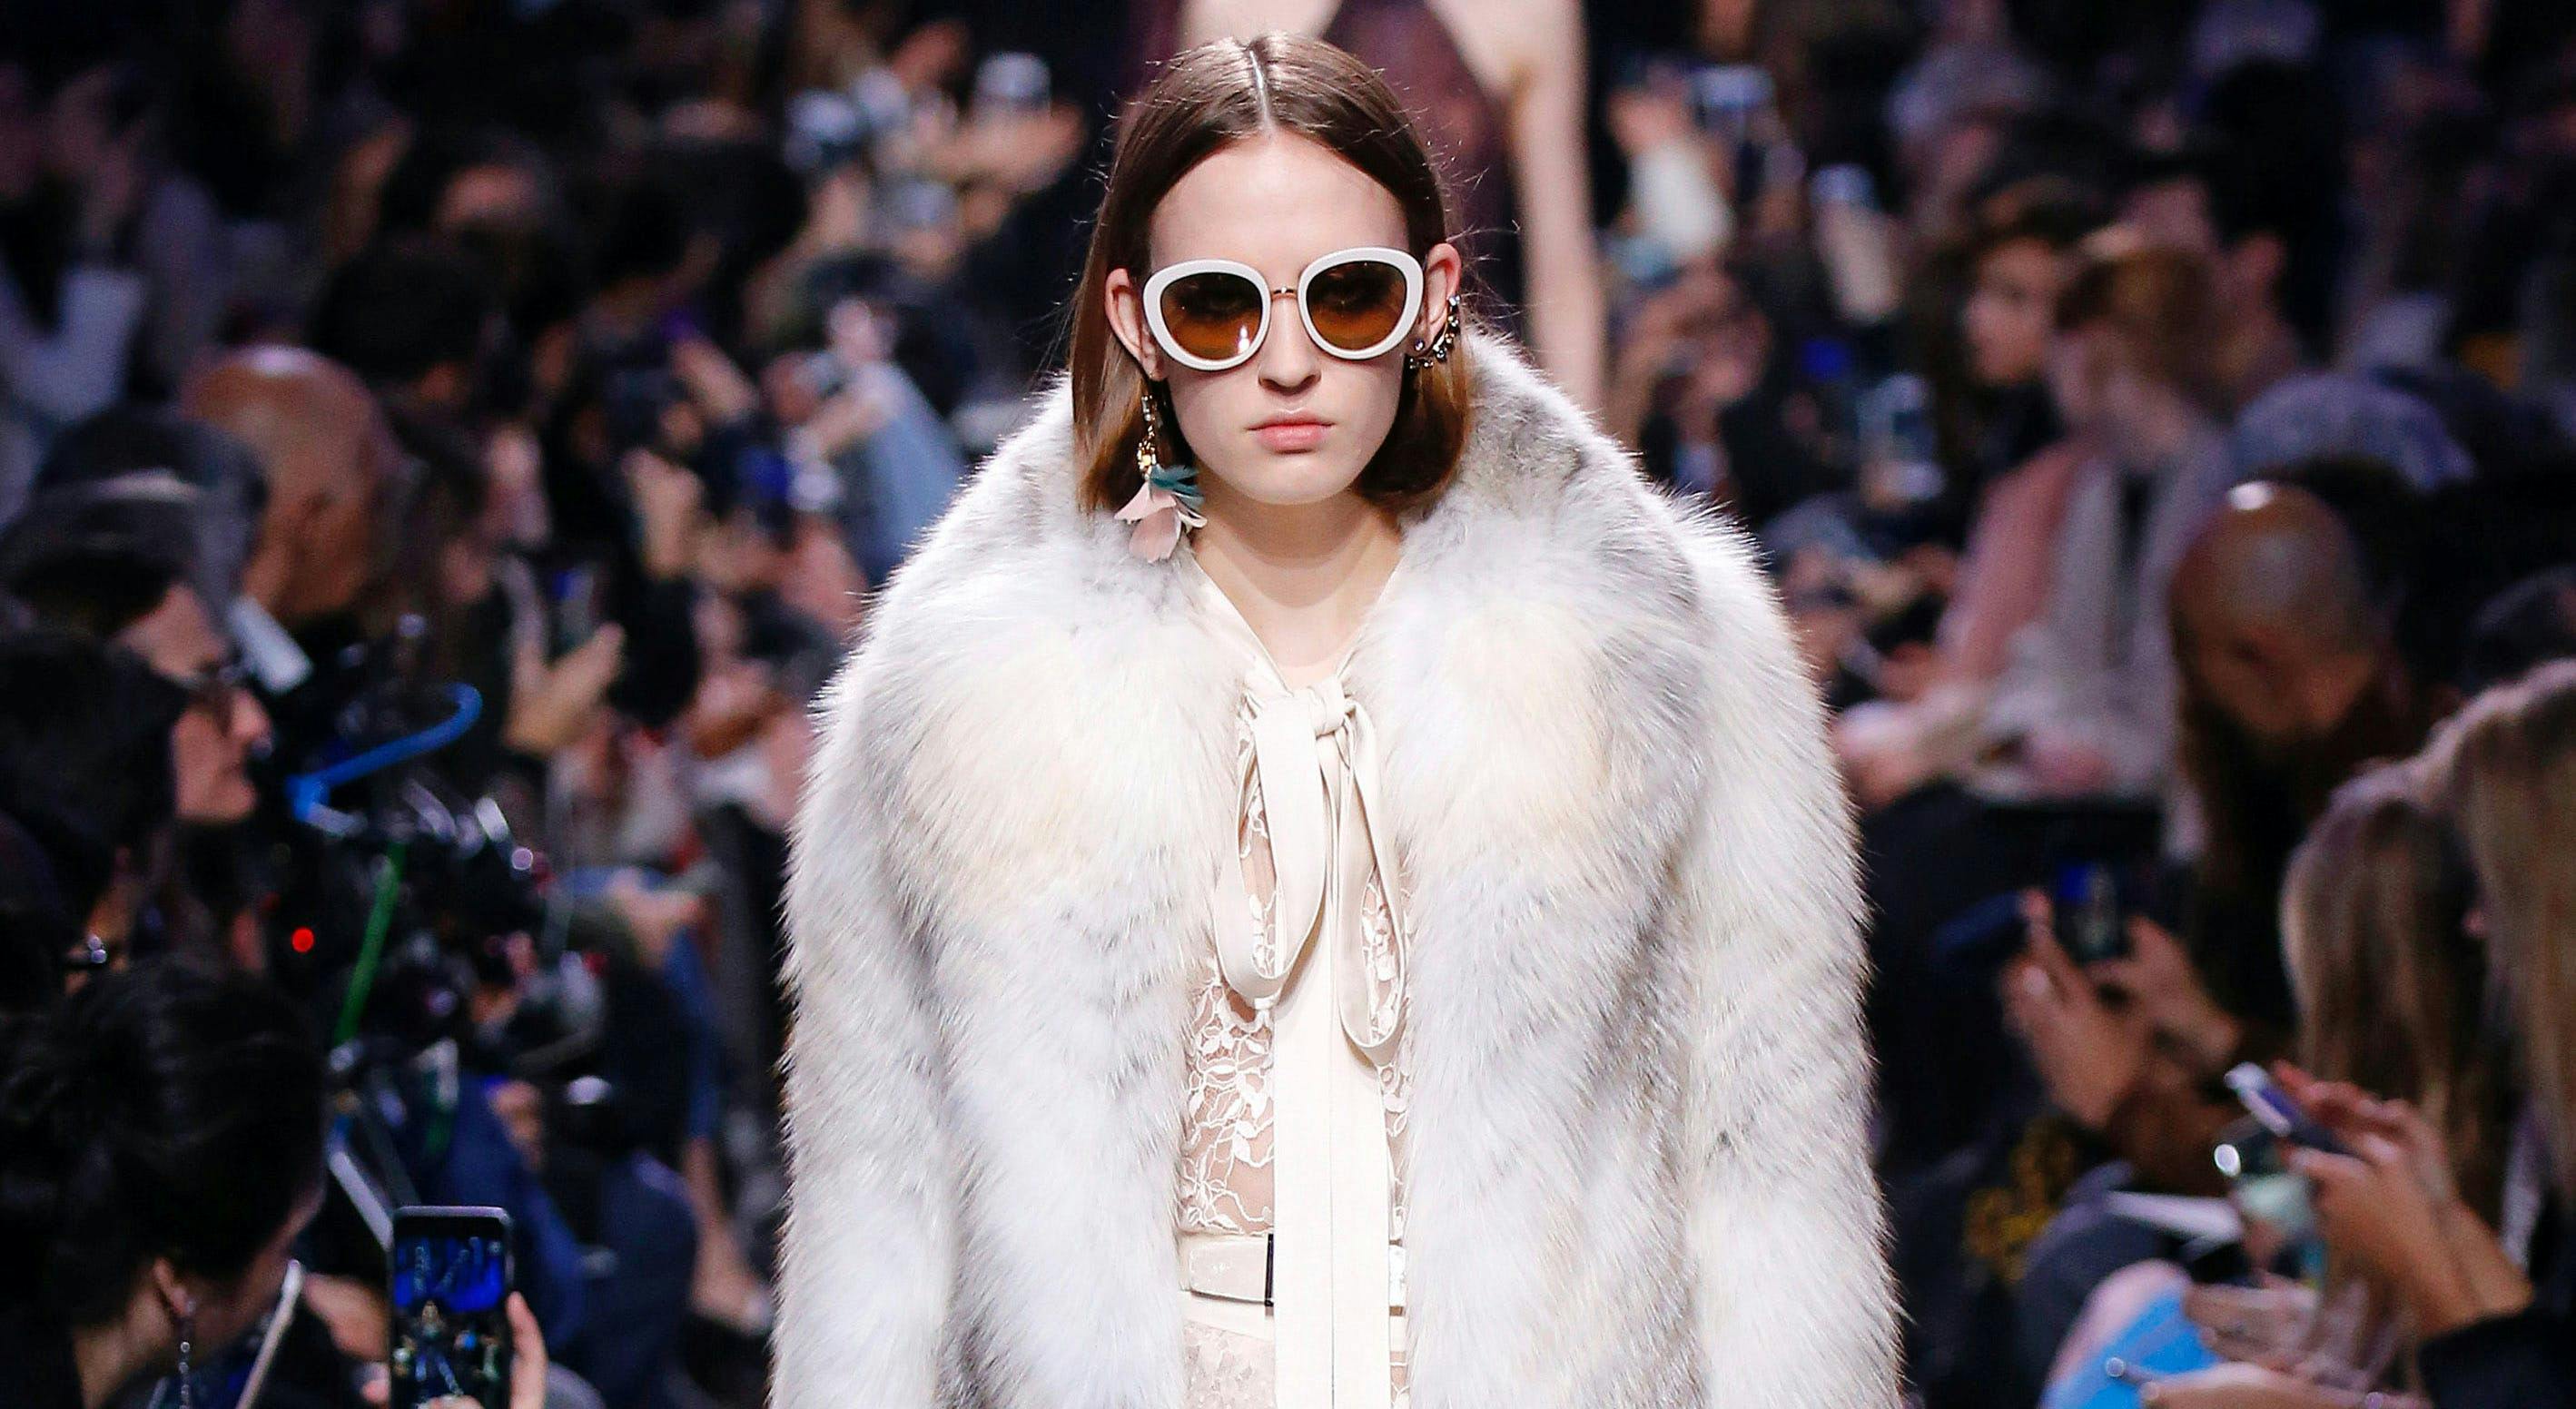 elie_saab_ ready to wear fall winter 2017-18 paris fashion week march 2017 sunglasses accessories accessory person human fur